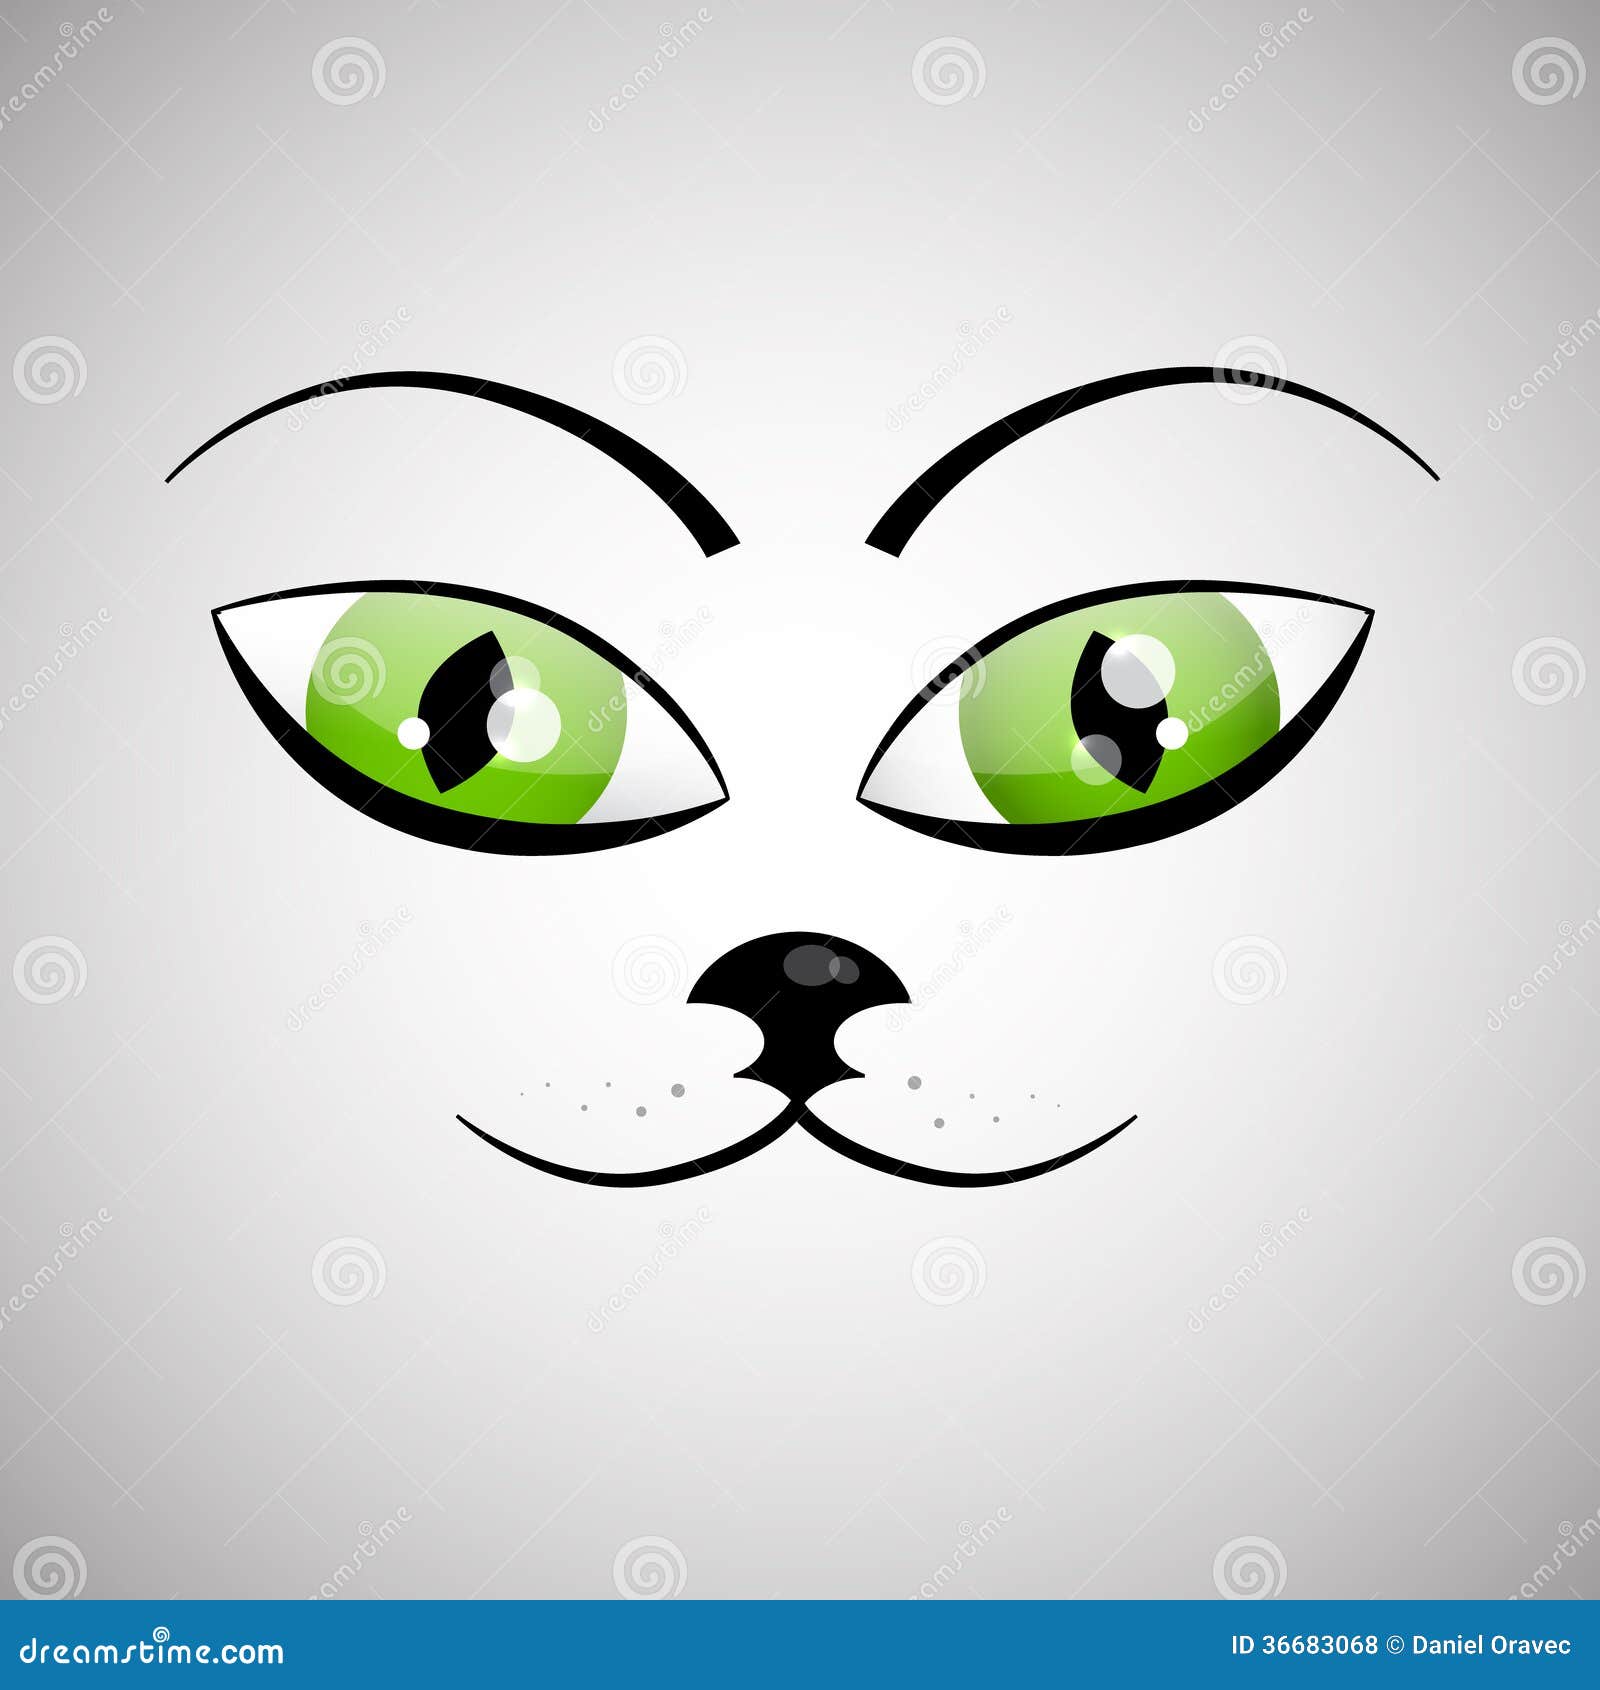 Funny cat illustration, viral meme pixel art icon Stock Vector